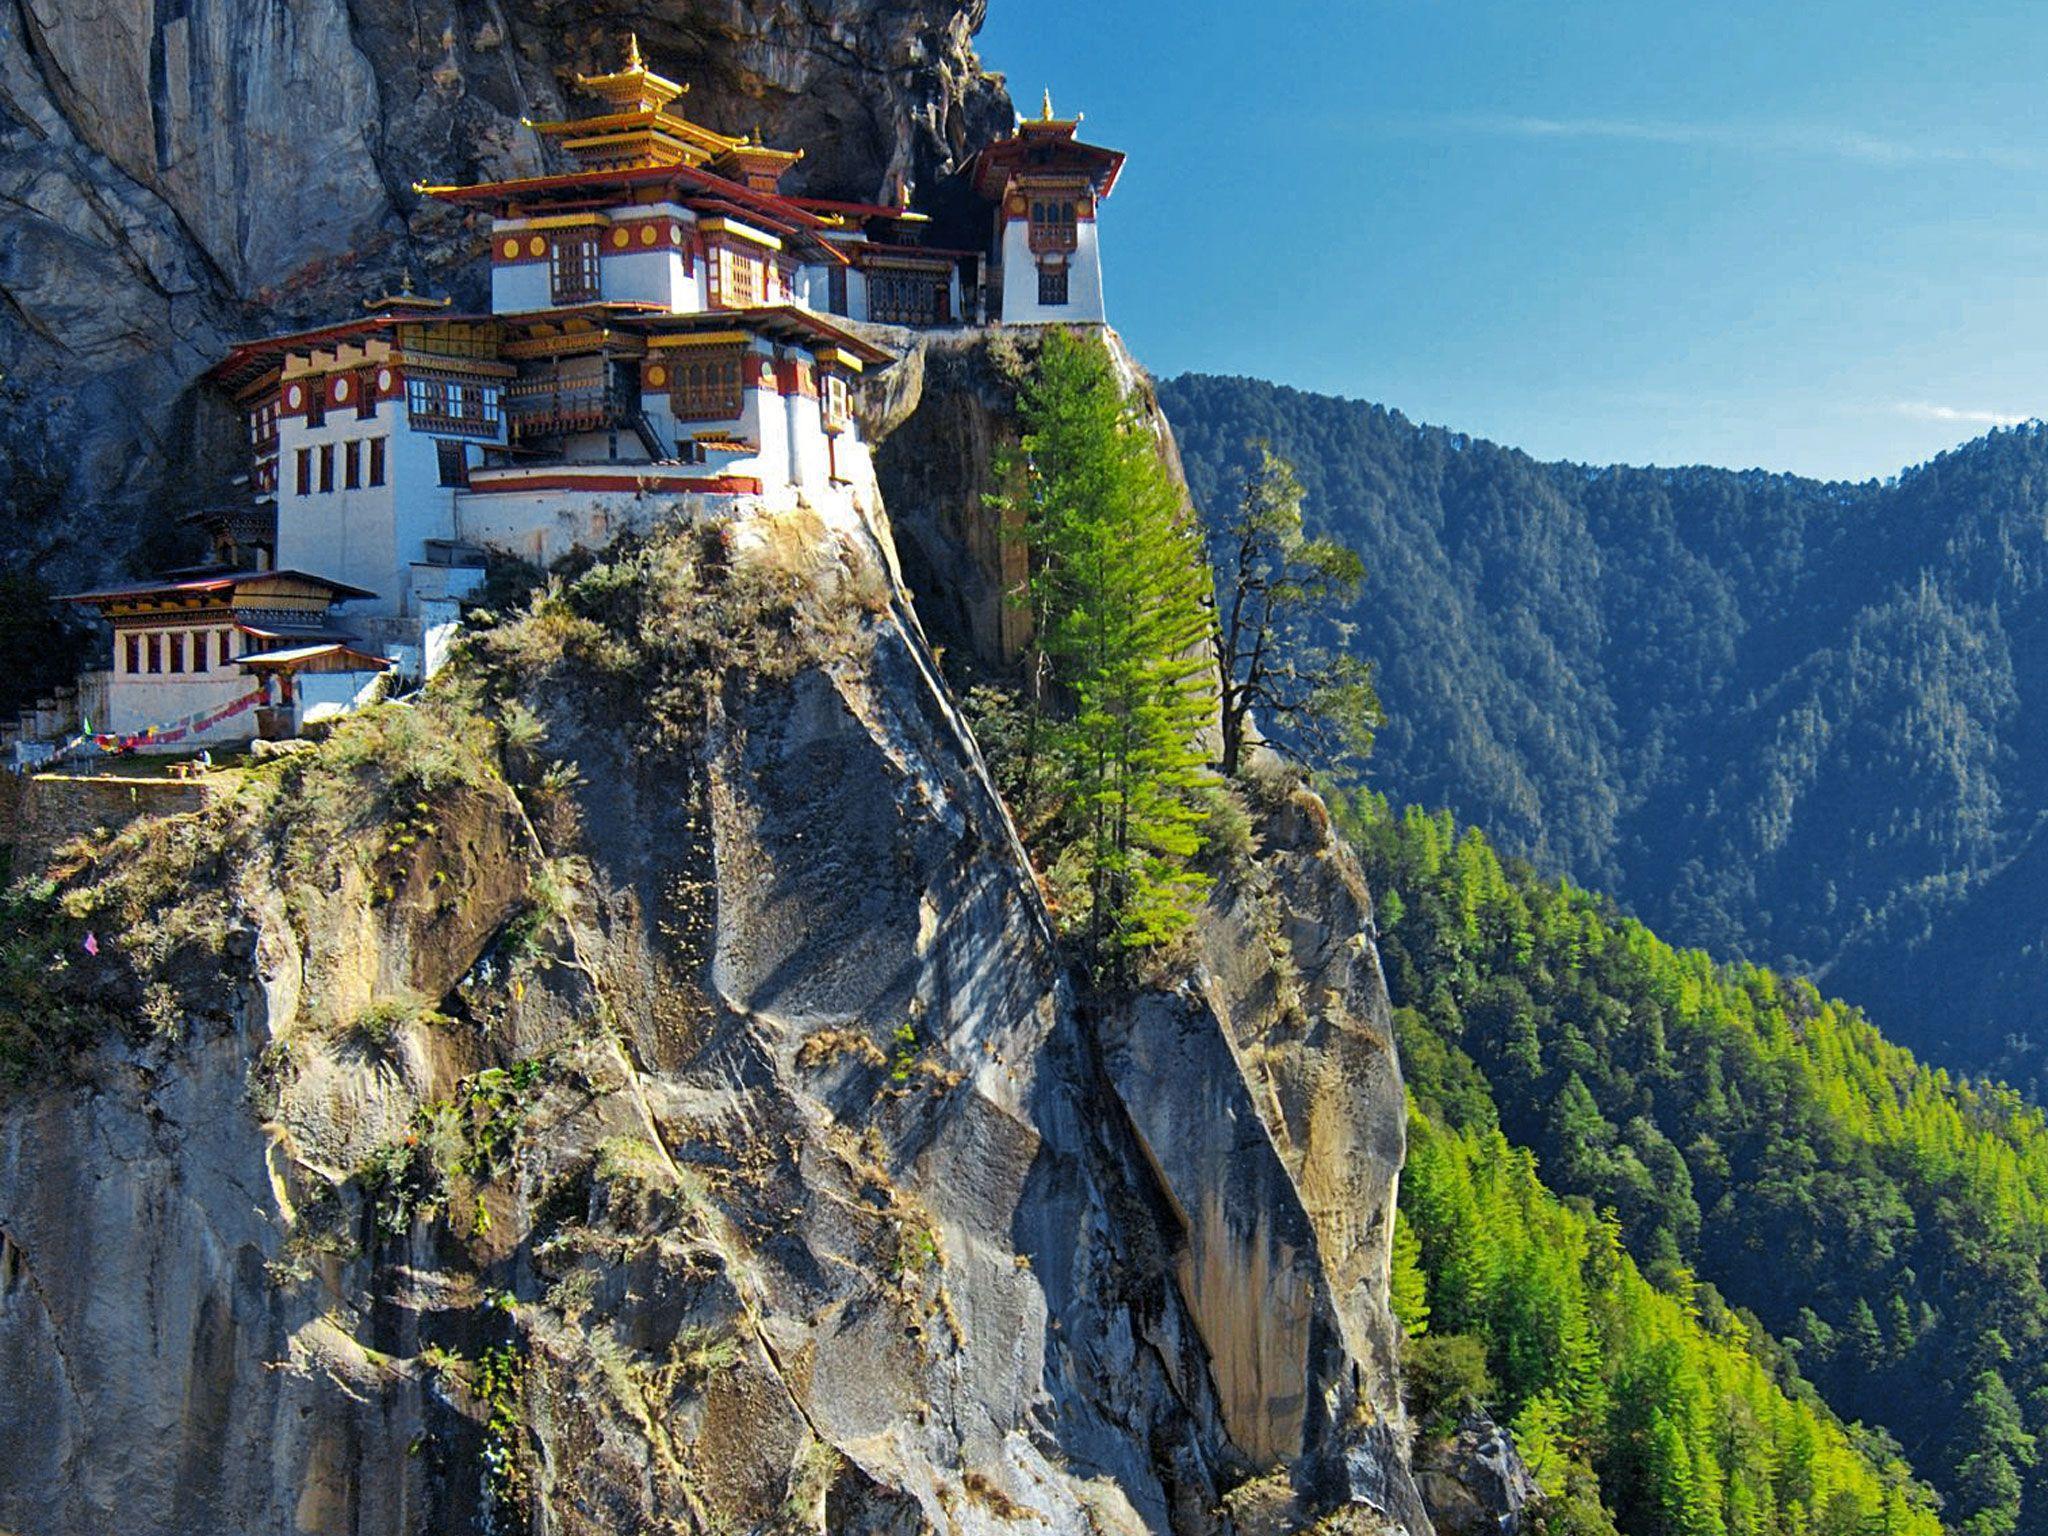 BHUTAN TOUR PACKAGE  “Happiness is a place”  05 Nights / 06 Days | 02 Nights Thimphu + 01 Night Punakha + 02 Nights Paro